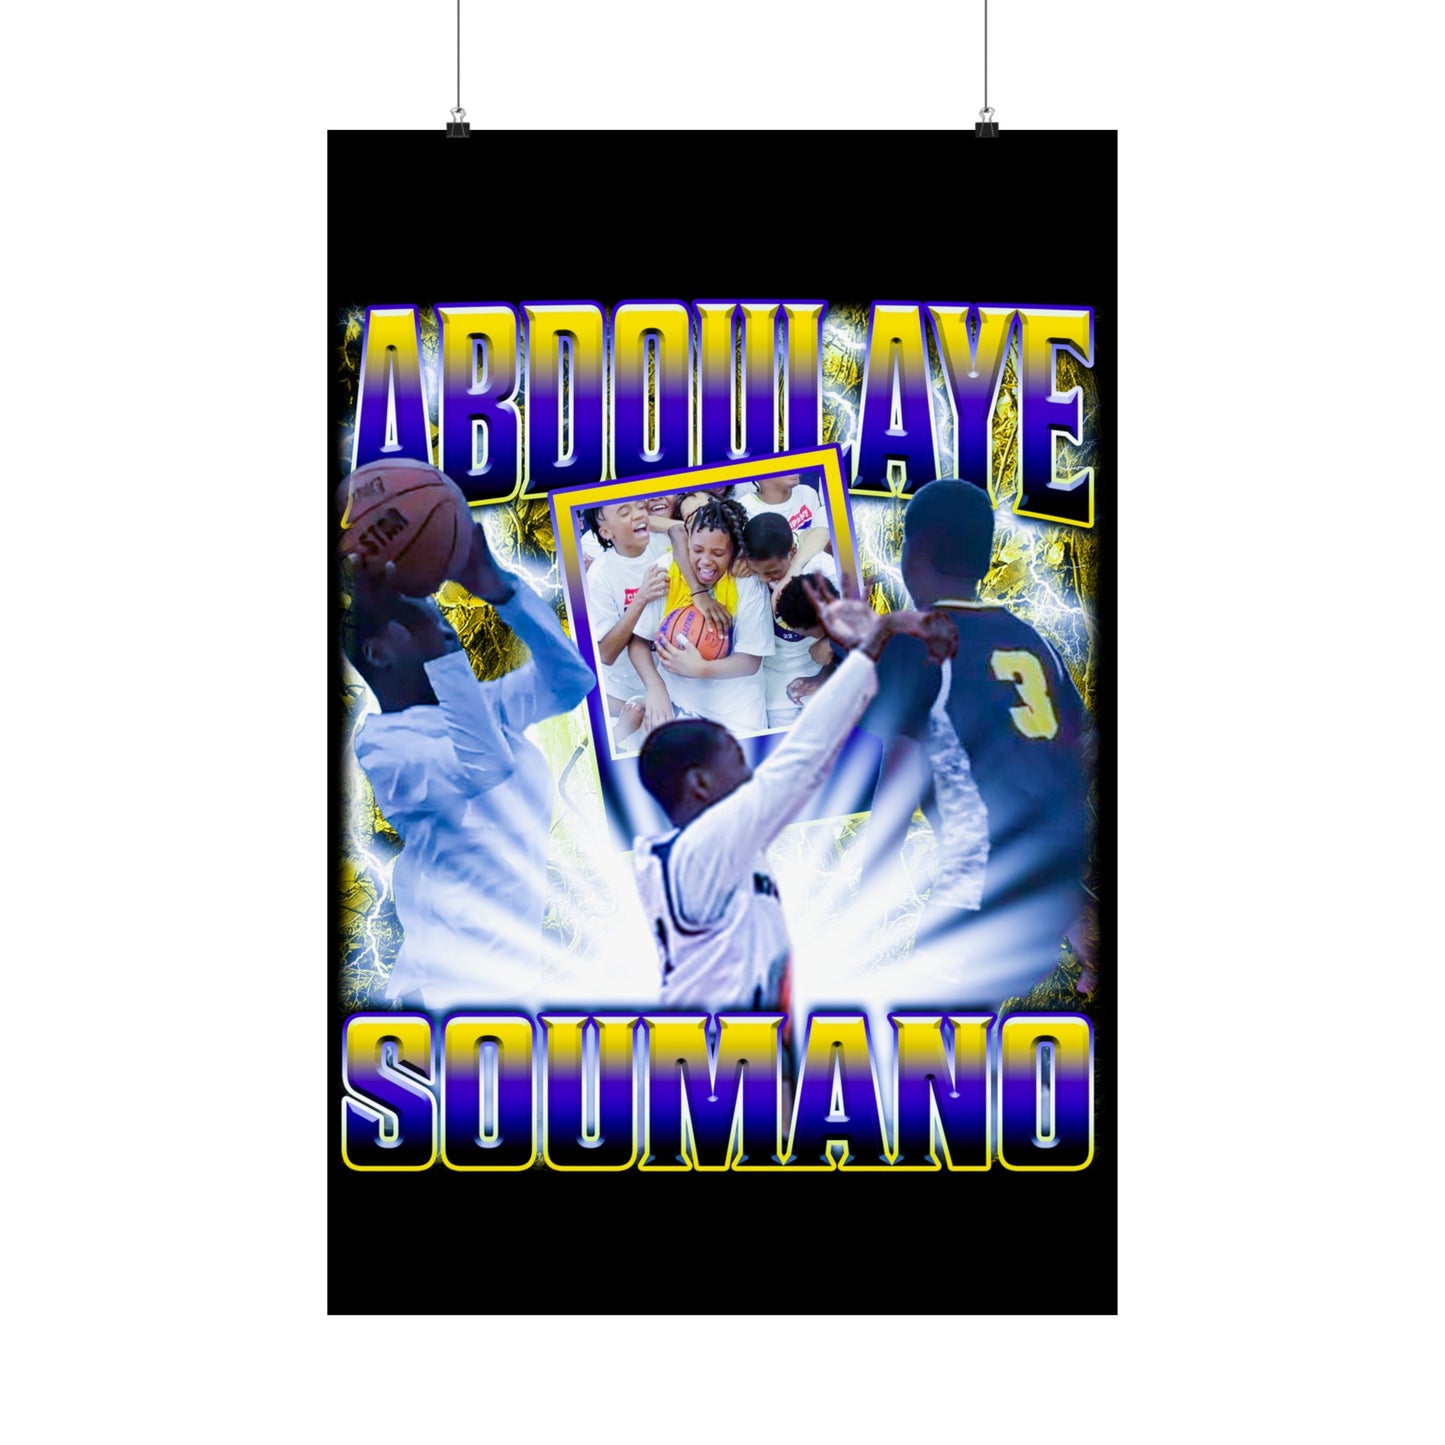 Abdoulaye Soumano Poster 24" x 36"